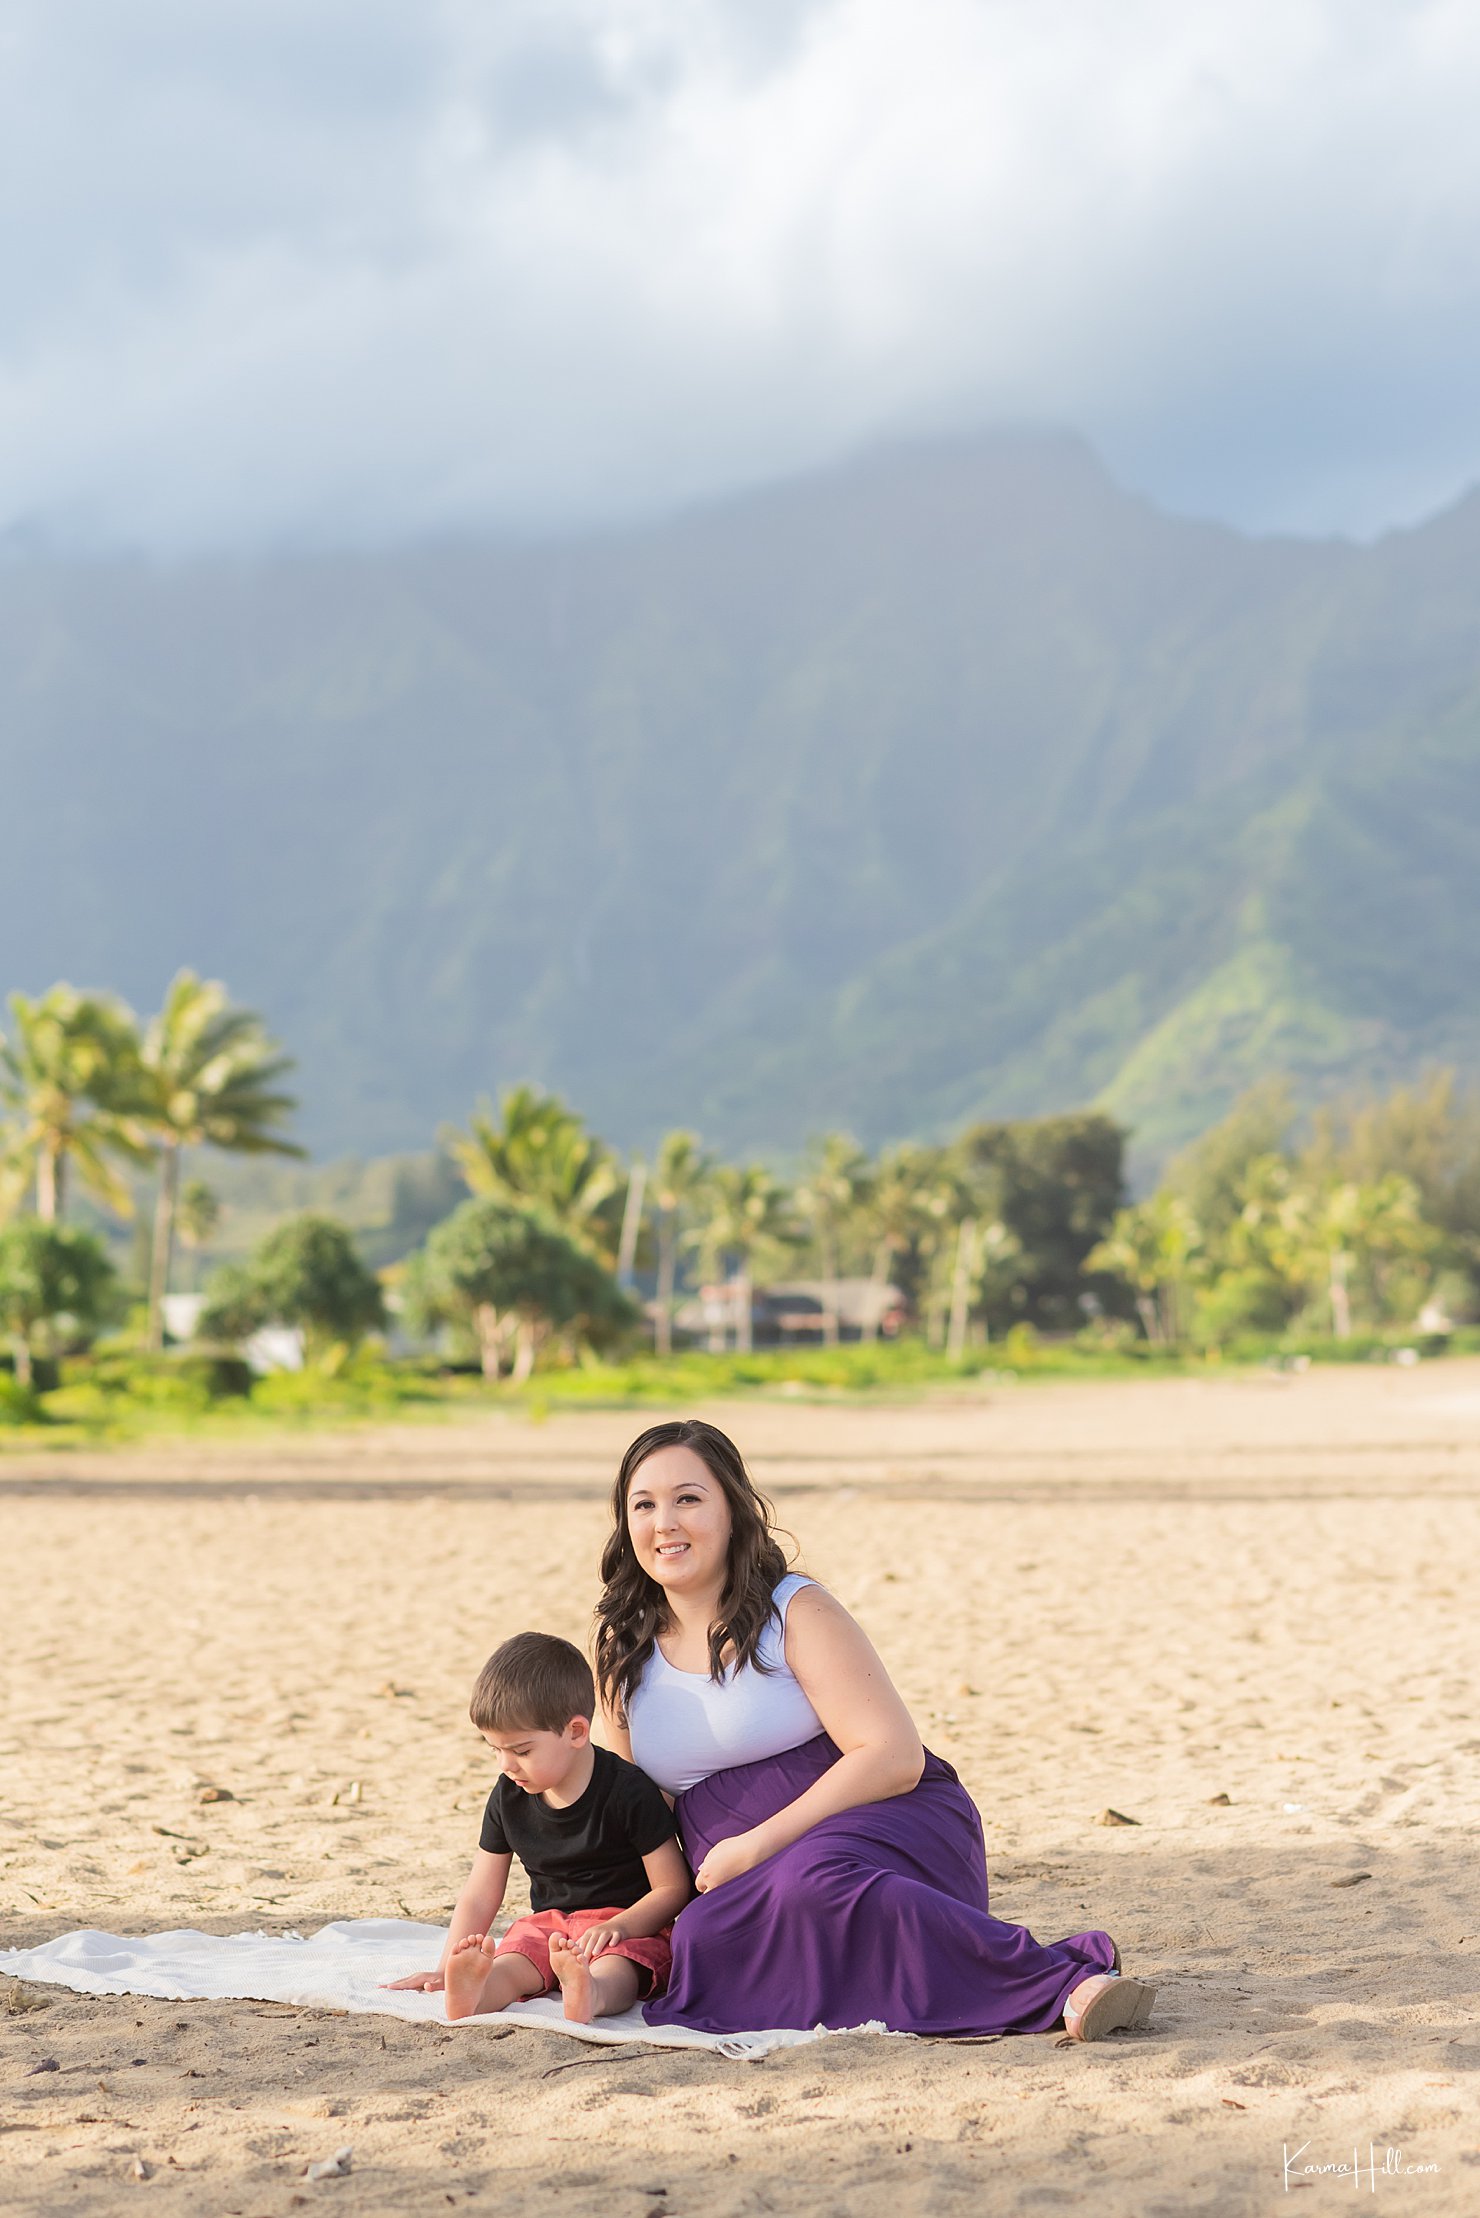 best beaches in kauai for portraits